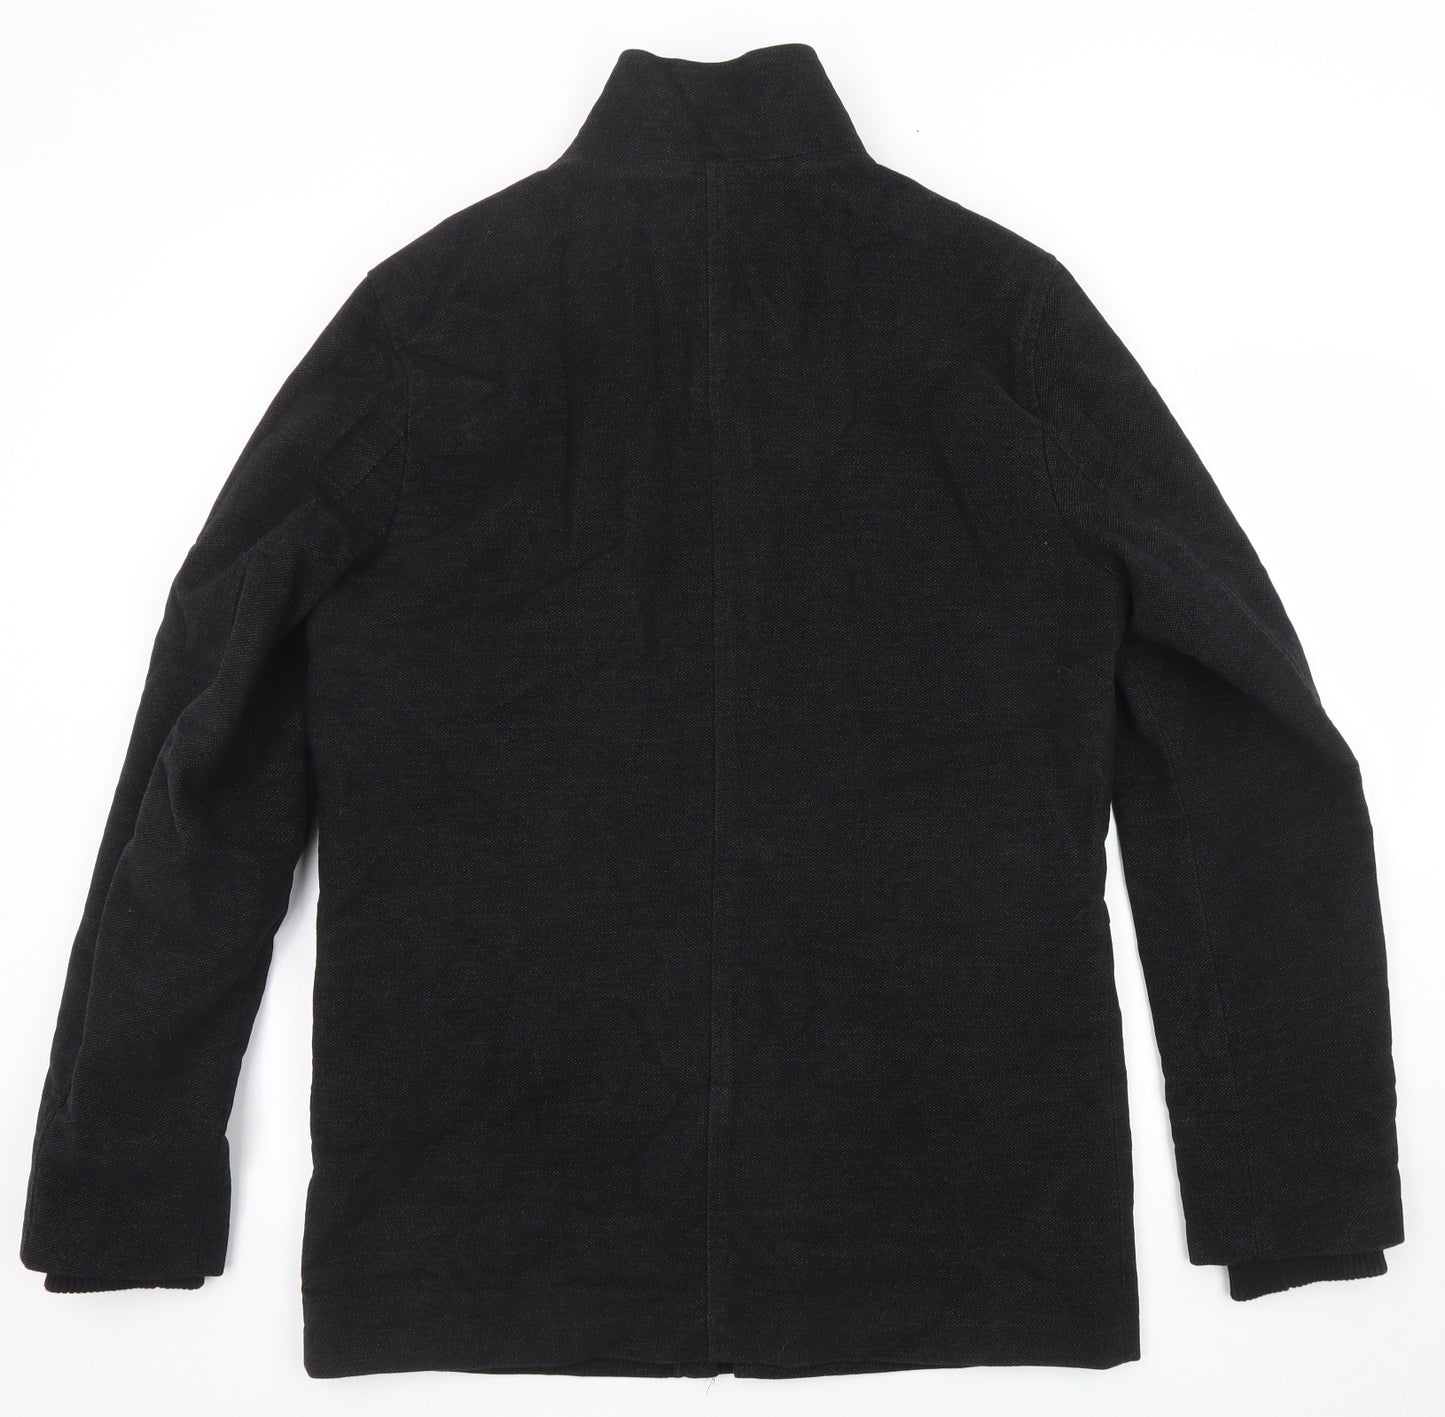 Marks and Spencer Mens Black Jacket Size M Zip